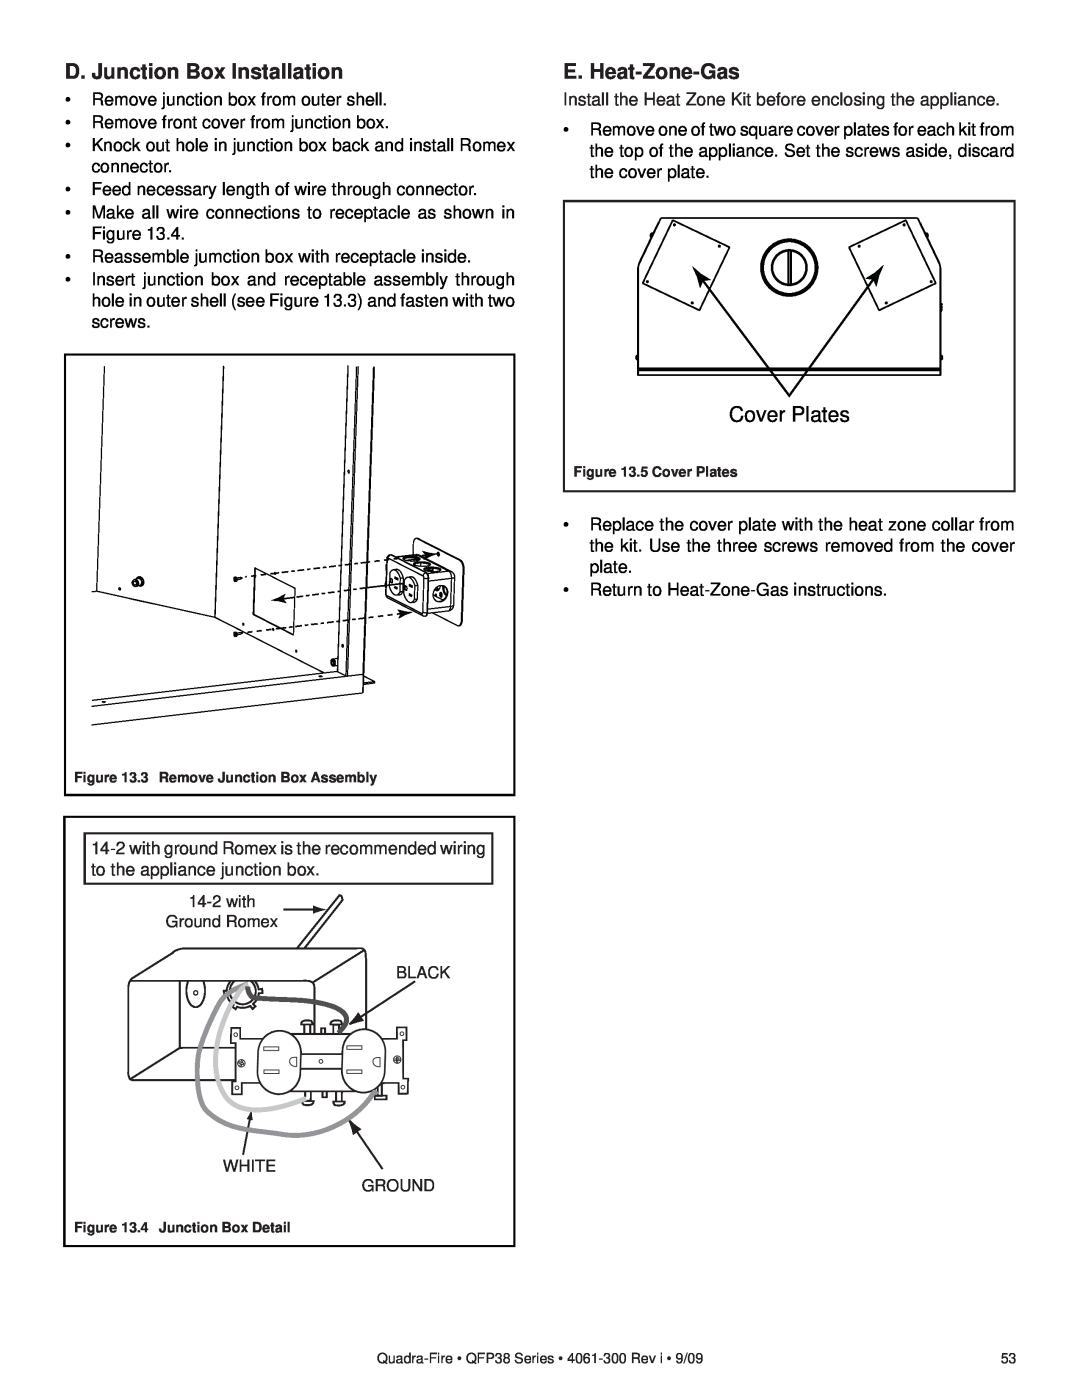 Quadra-Fire QFP38-LP, QFP38-NG owner manual D. Junction Box Installation, E. Heat-Zone-Gas, Cover Plates 